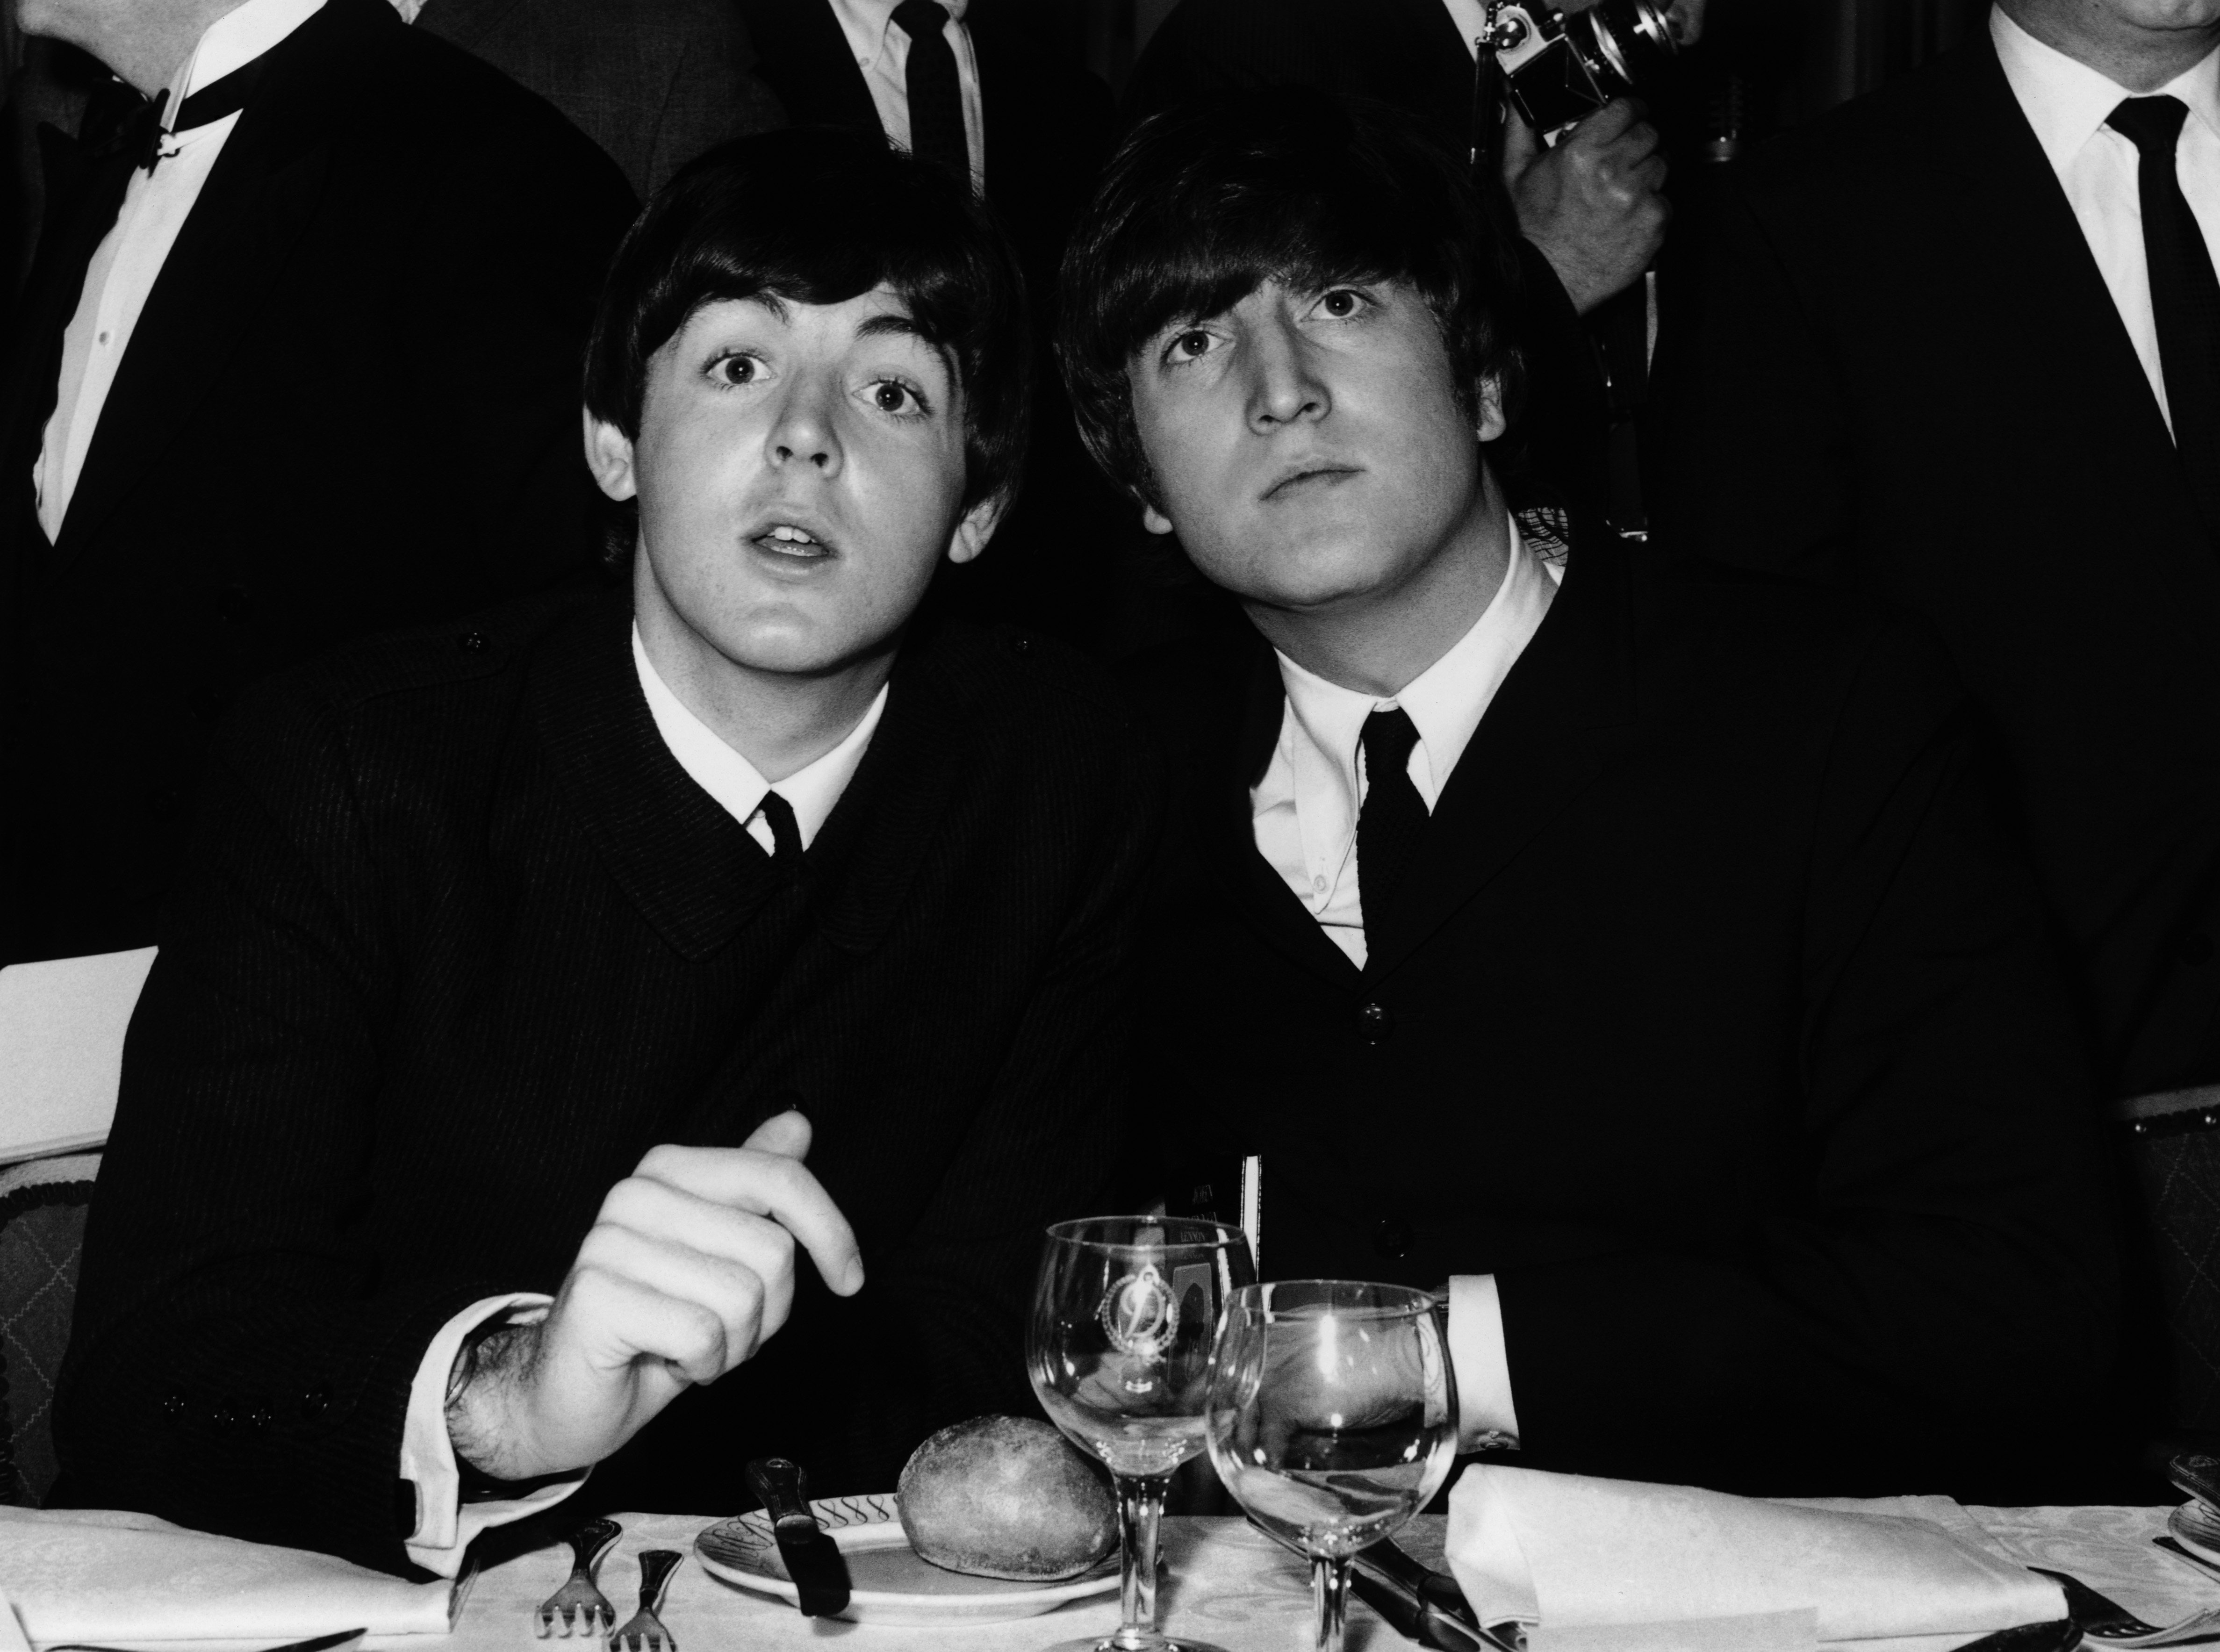 The Beatles' Paul McCartney and John Lennon at a table